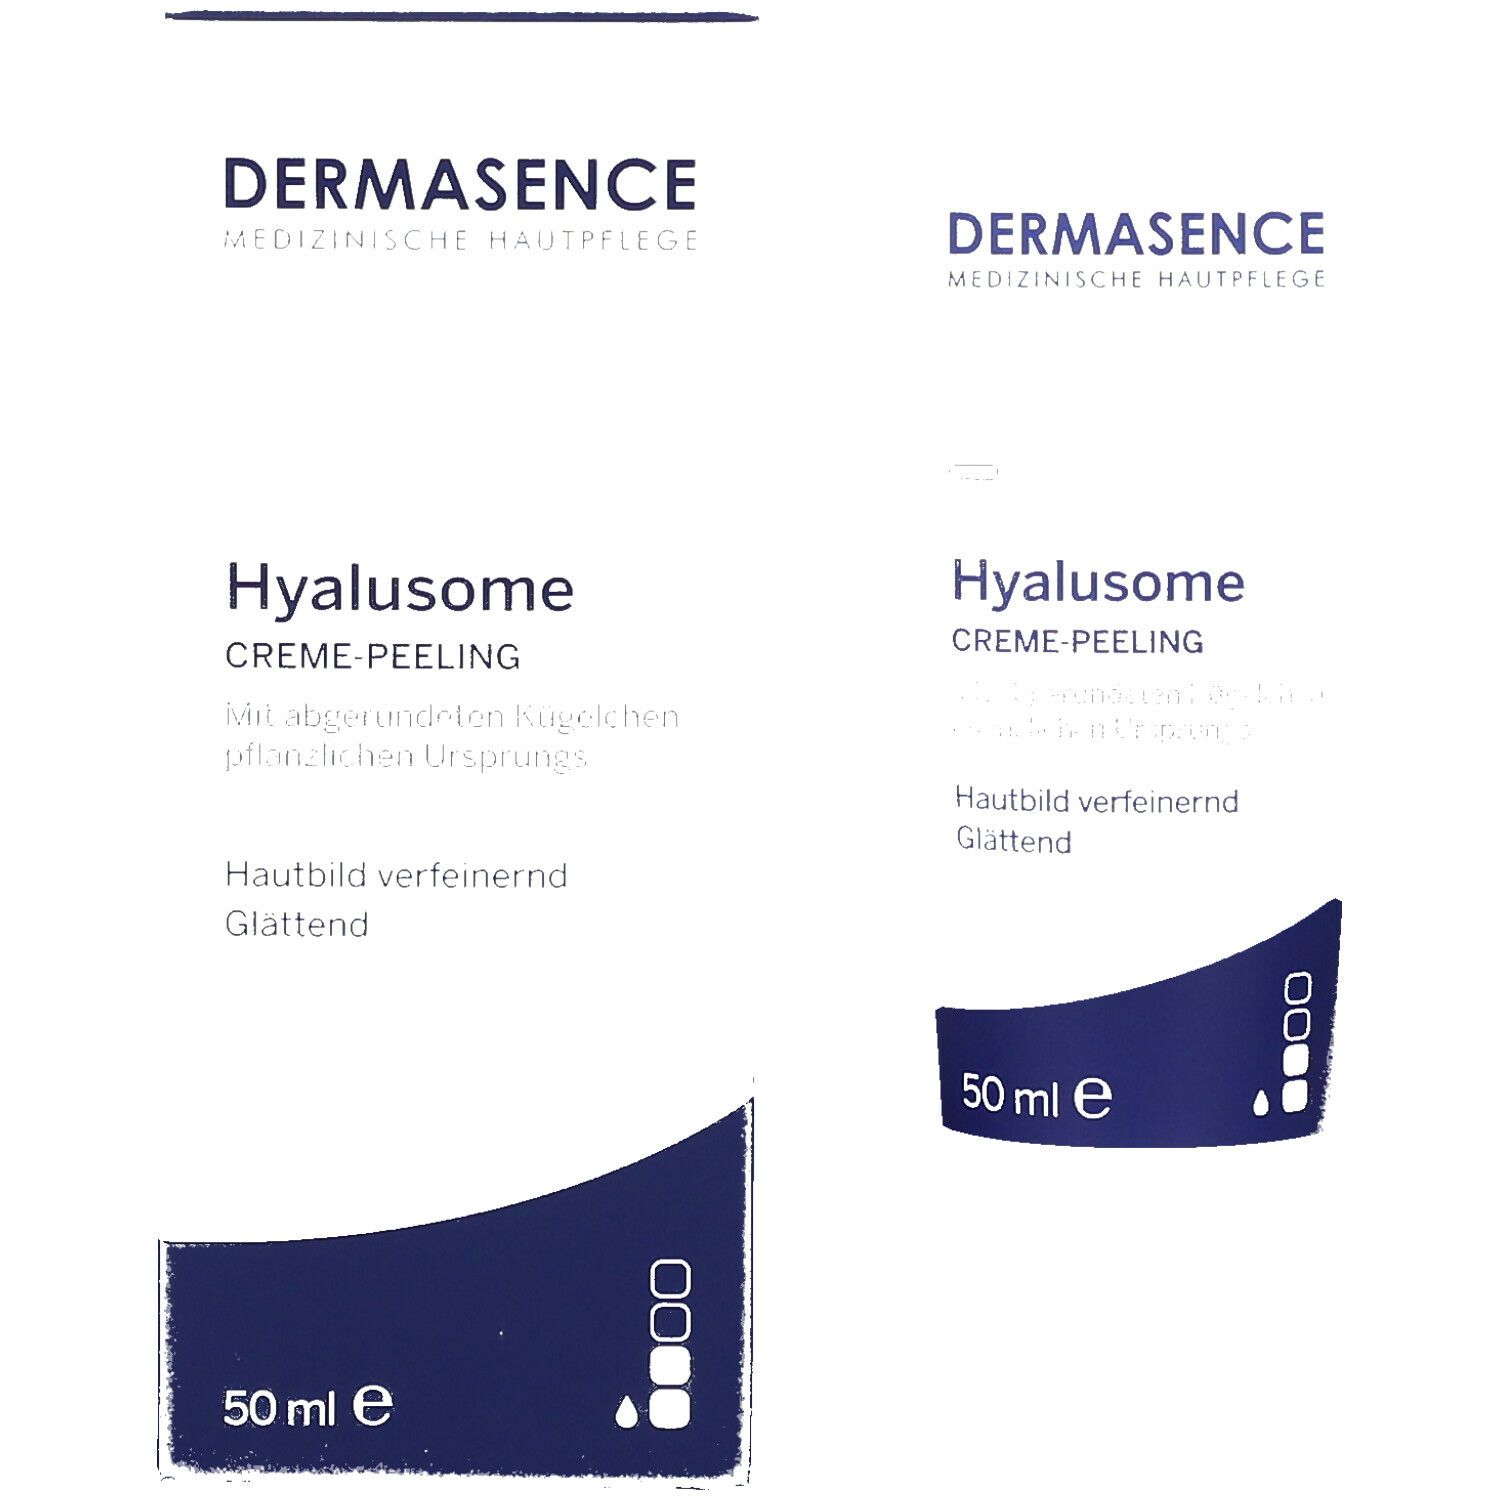 DERMASENCE Hyalusome CREME-PEELING